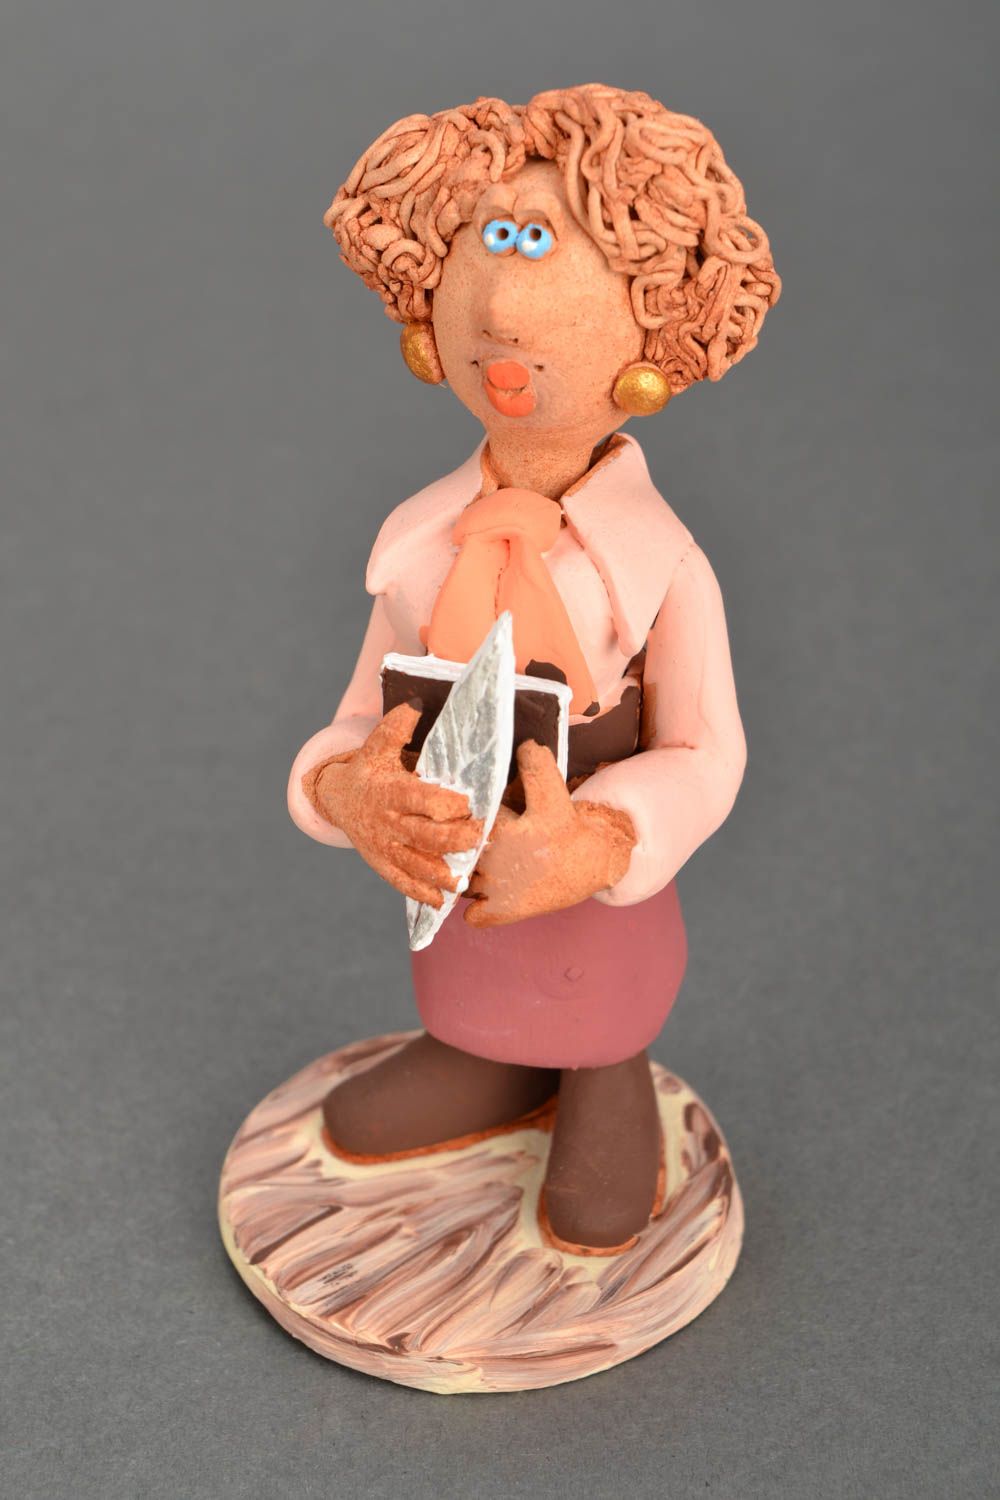 Statuina in ceramica fatta a mano figurina divertente souvenir di argilla foto 3